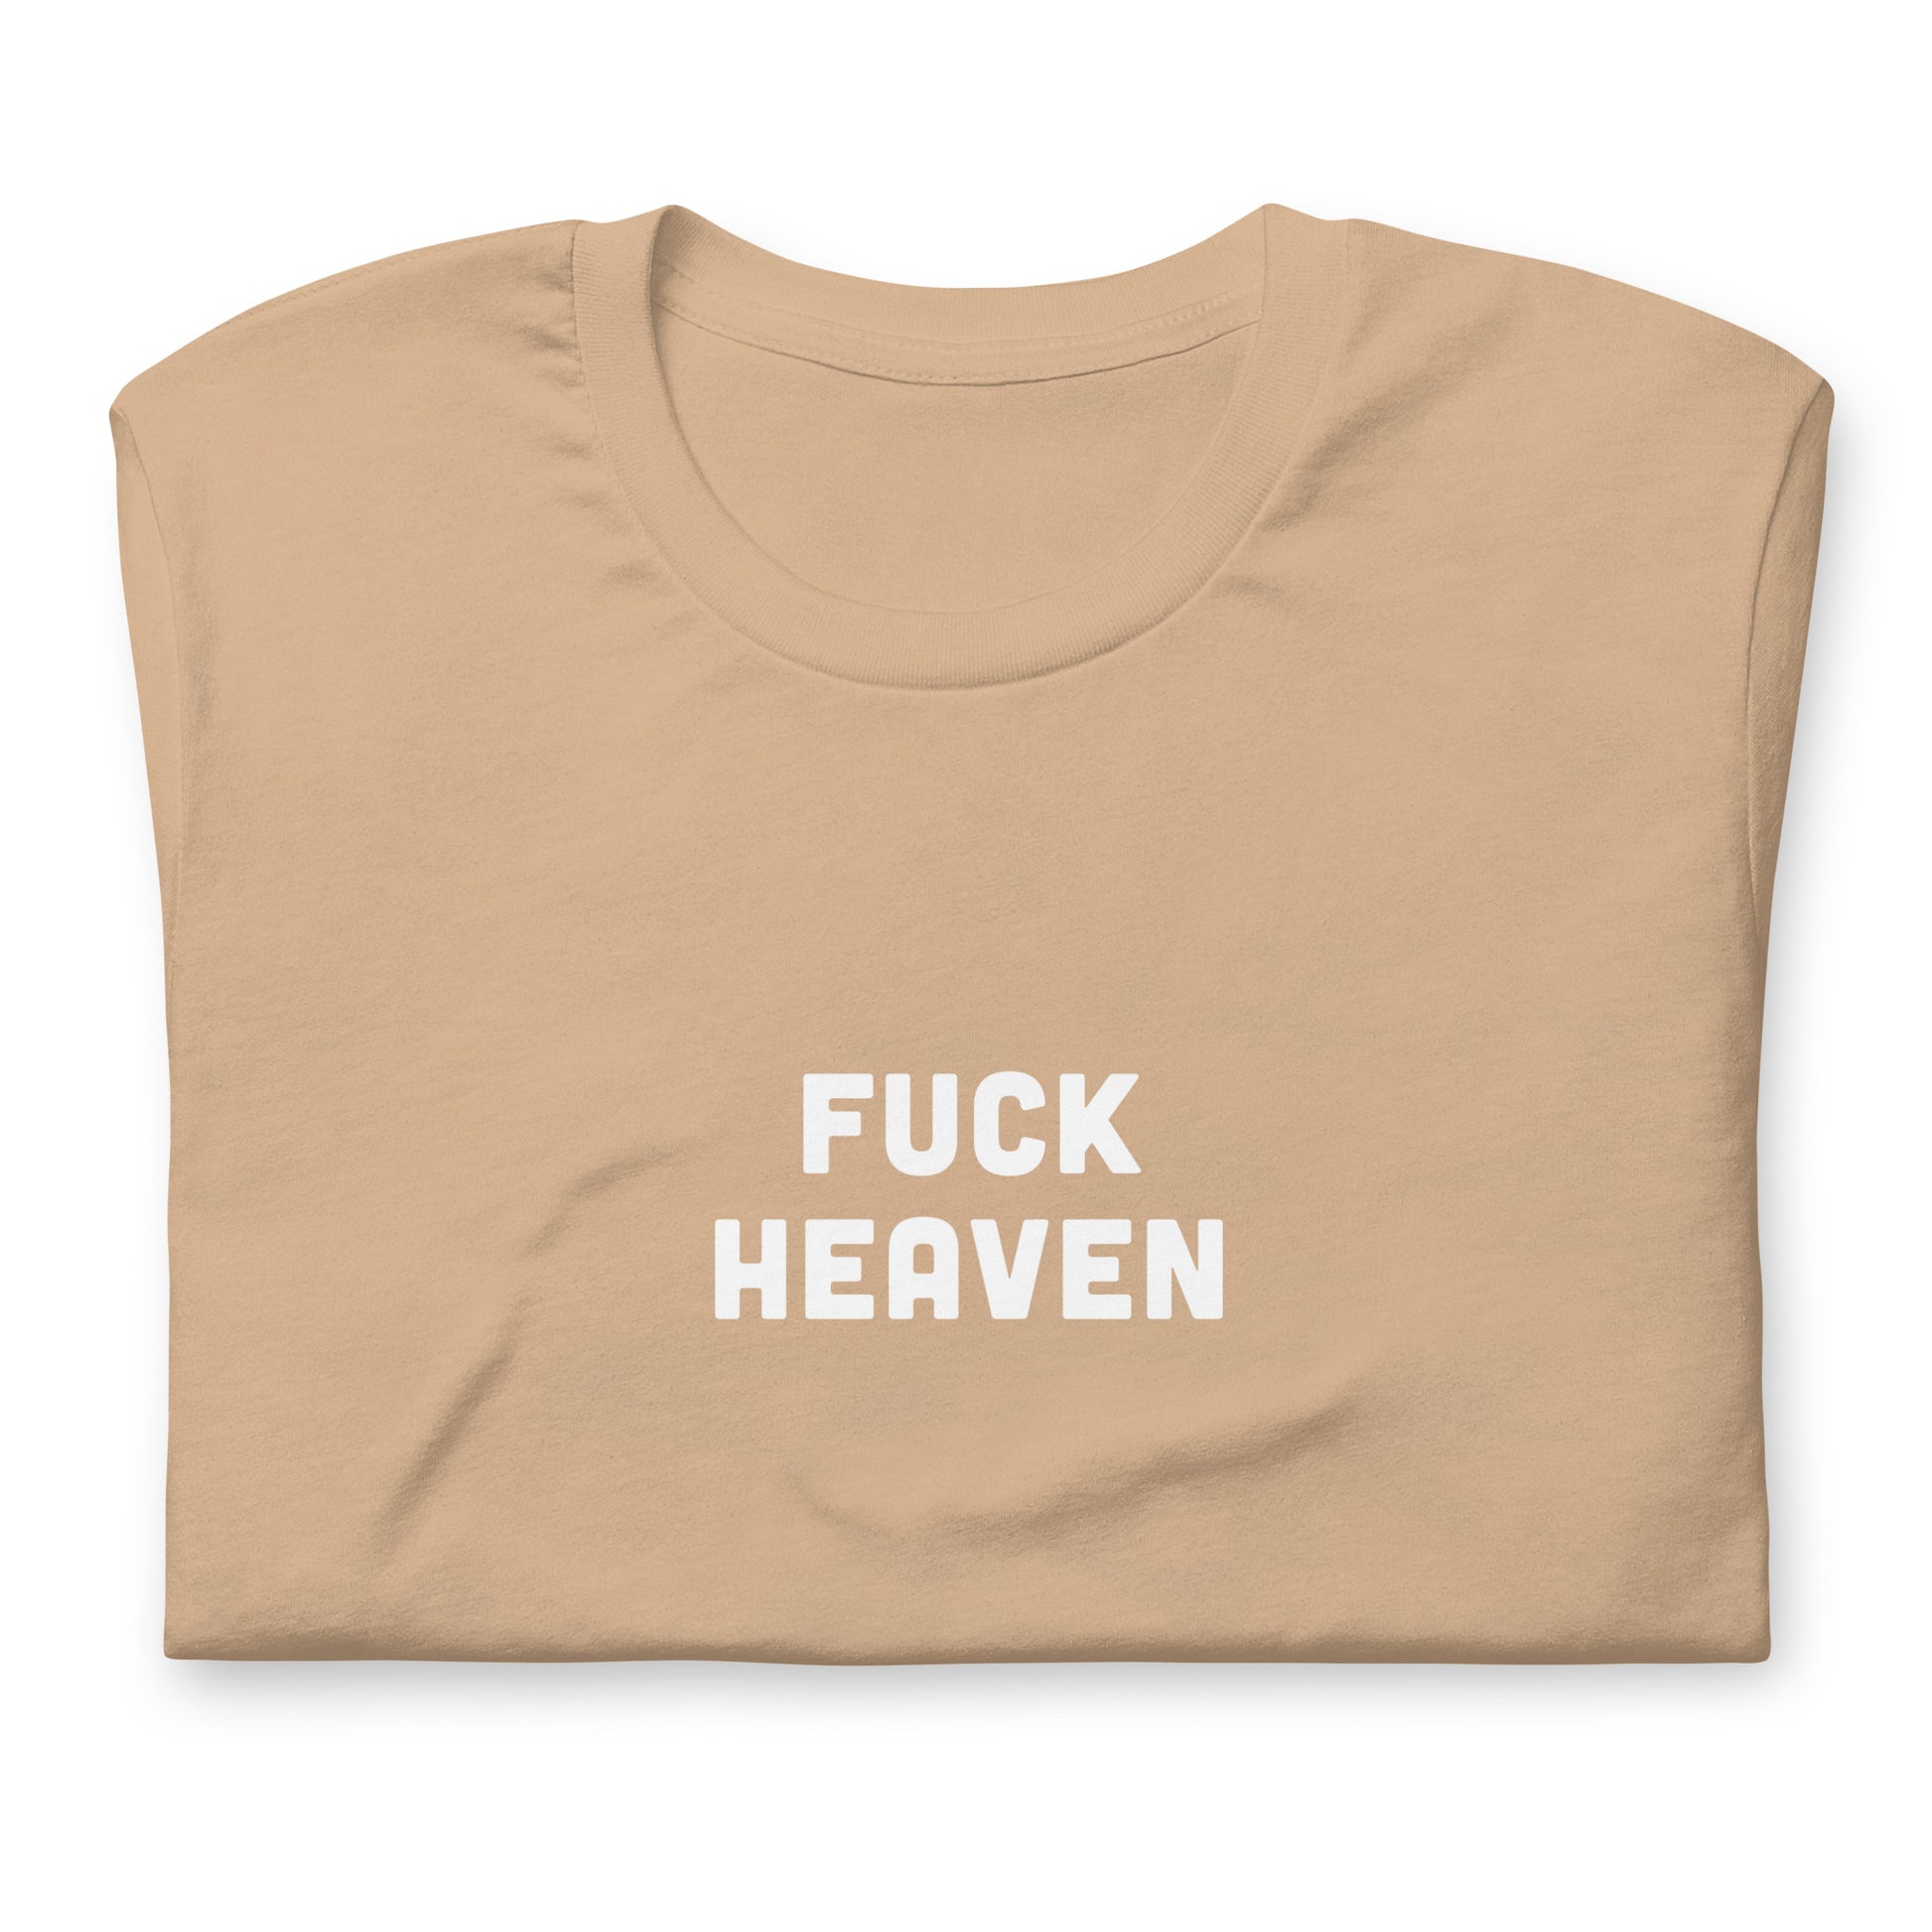 Fuck Heaven T-Shirt Size XL Color Forest